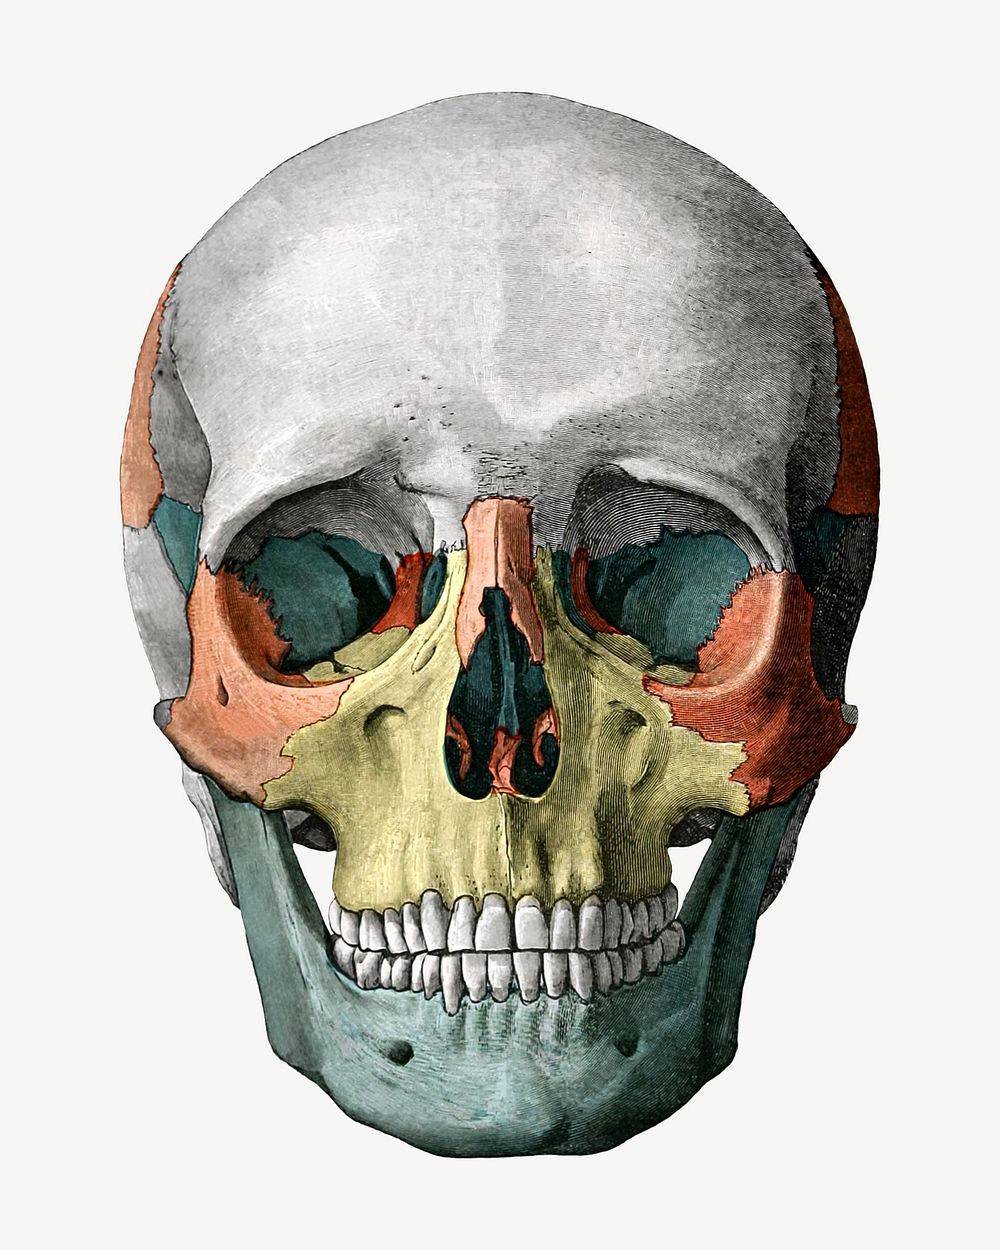 Human skull vintage illustration psd. Remixed by rawpixel. 